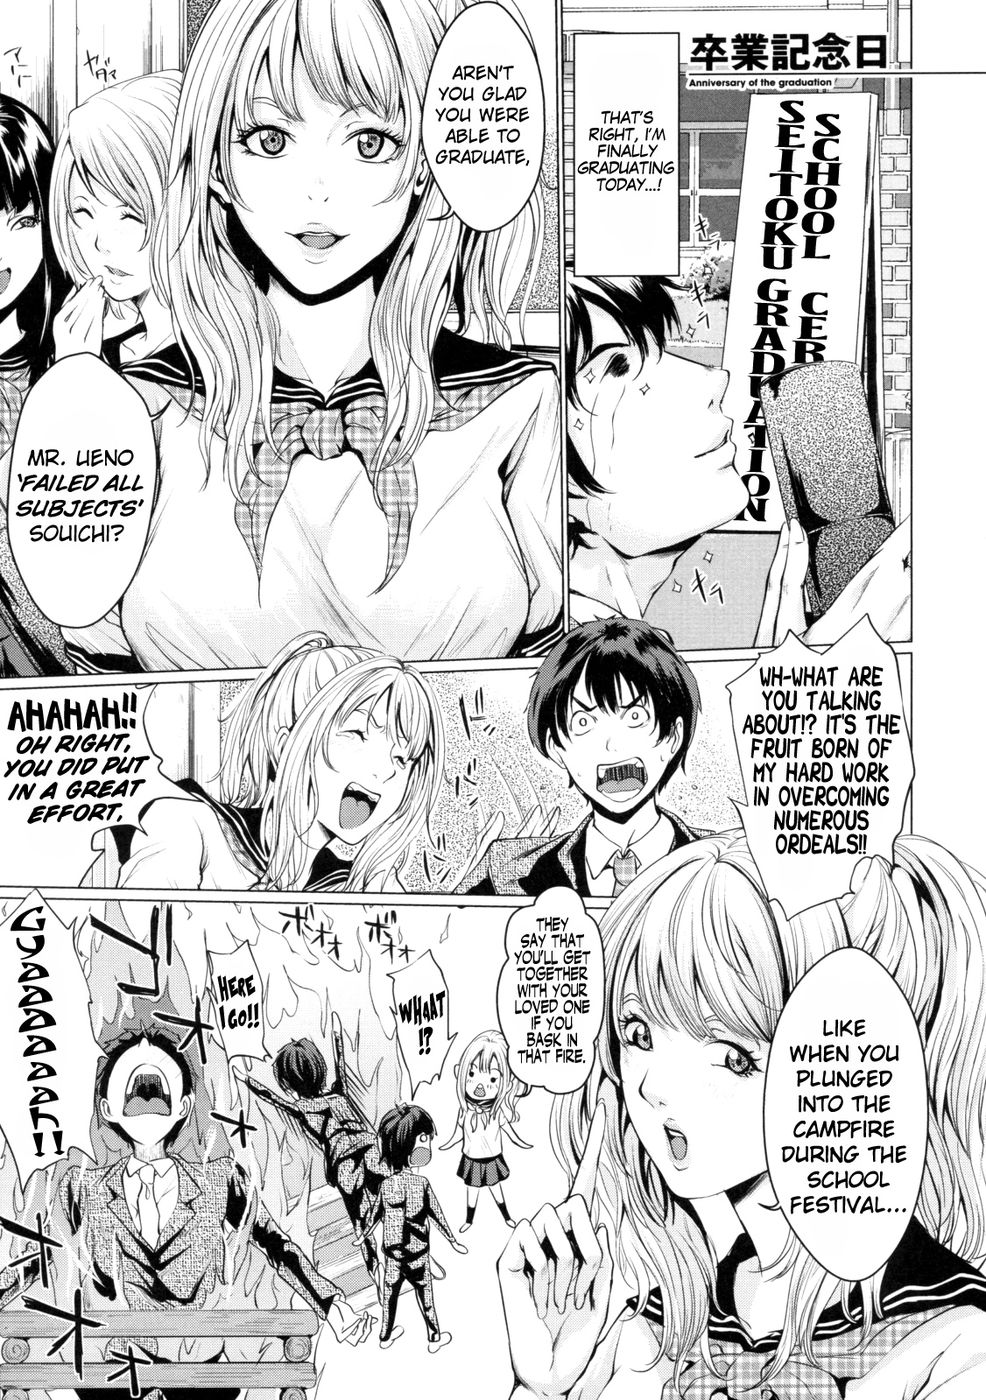 Hentai Manga Comic-Anniversary of the Graduation-Read-1